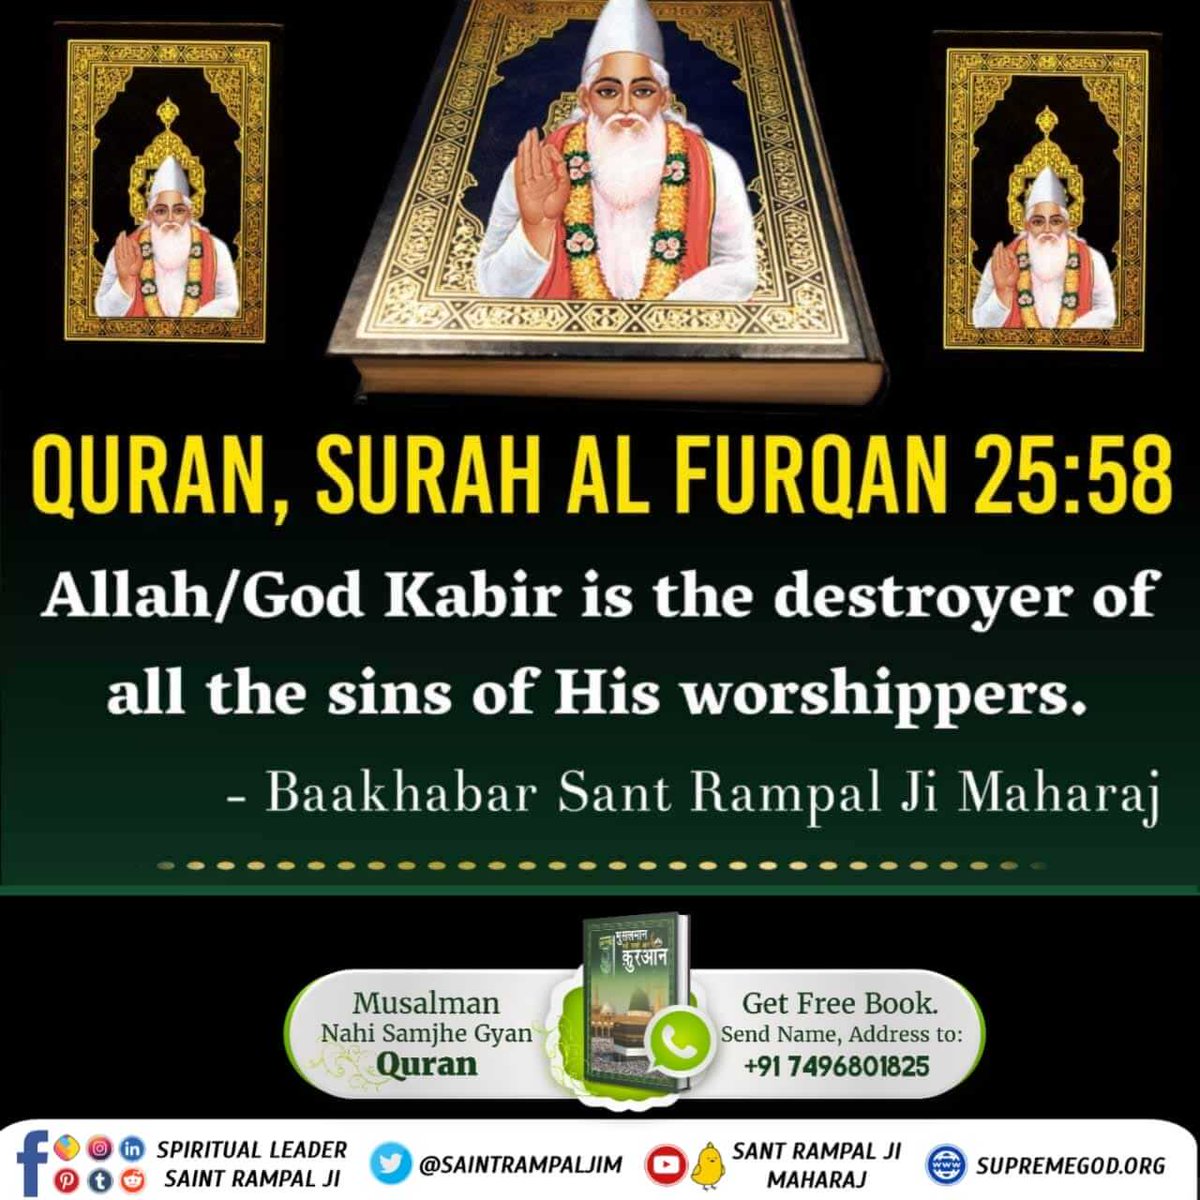 #HiddenSecretsInQuran Holy Quran surah Furqan 25 58 says Kabir Allah is worthy of being worshipped.he is the destroyer of all sins. #Allah Kabir